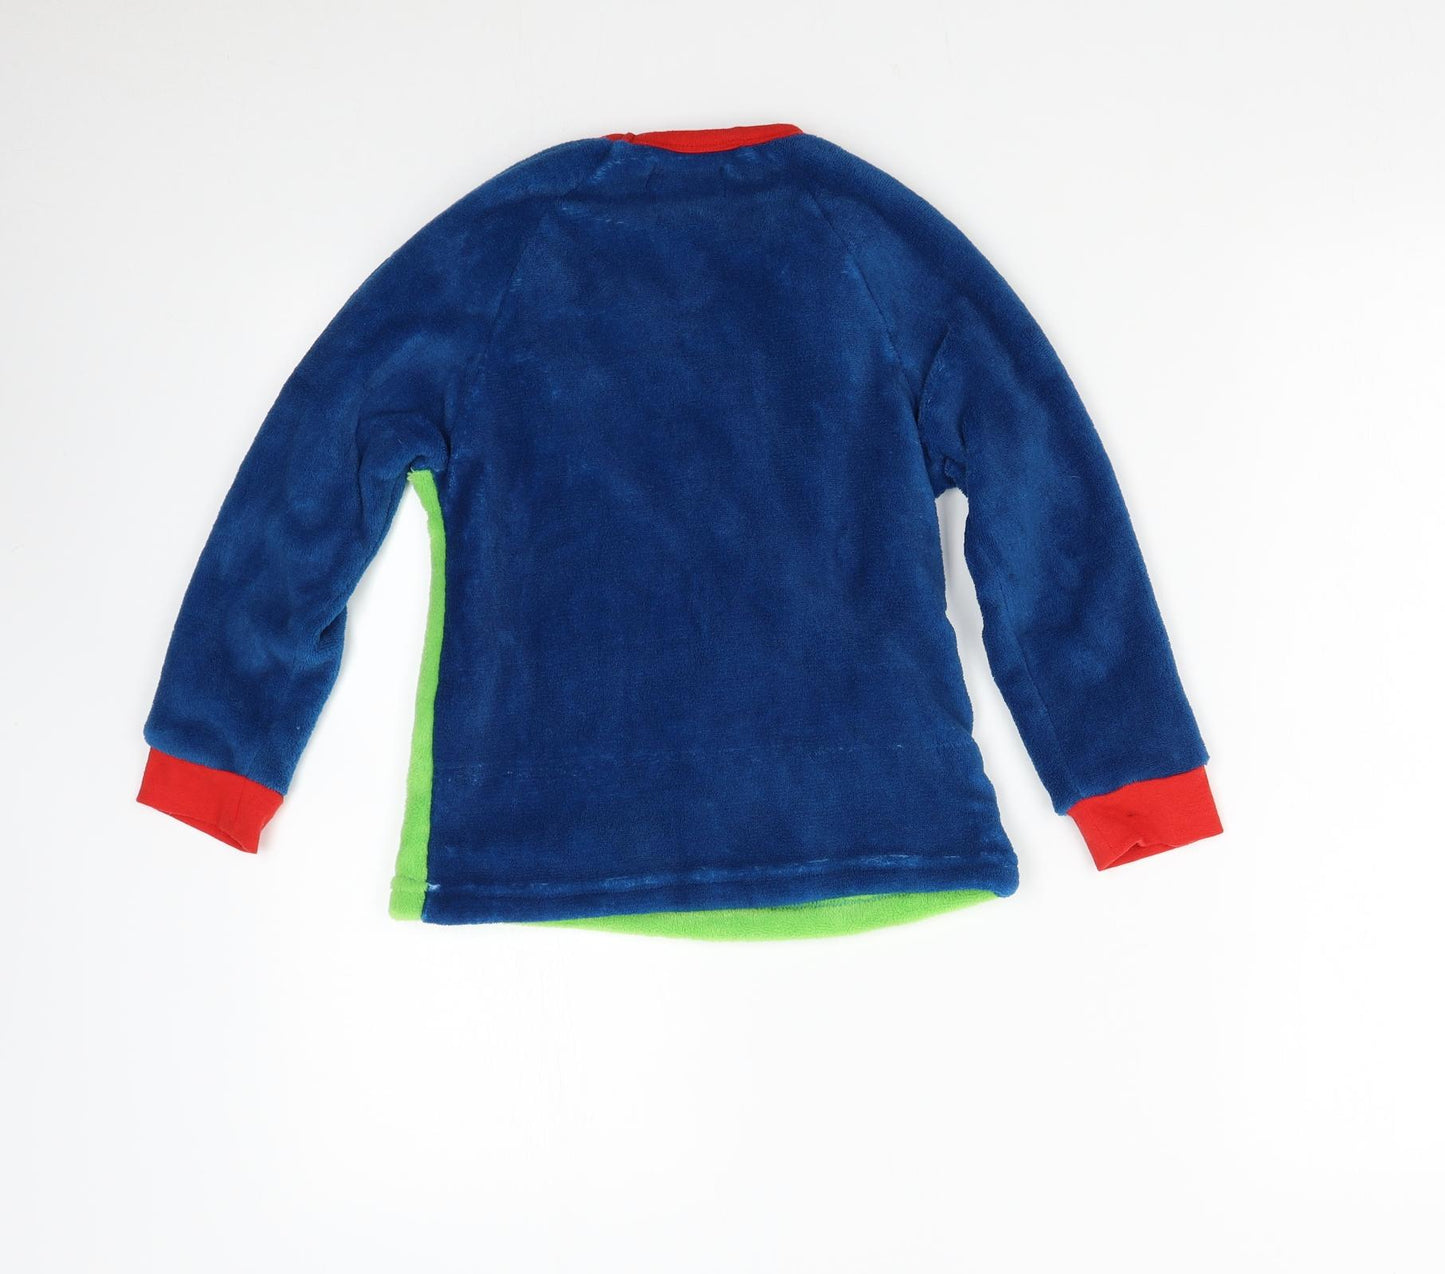 PJ Collections Boys Blue Solid Fleece  Pyjama Top Size 7-8 Years  - Monster